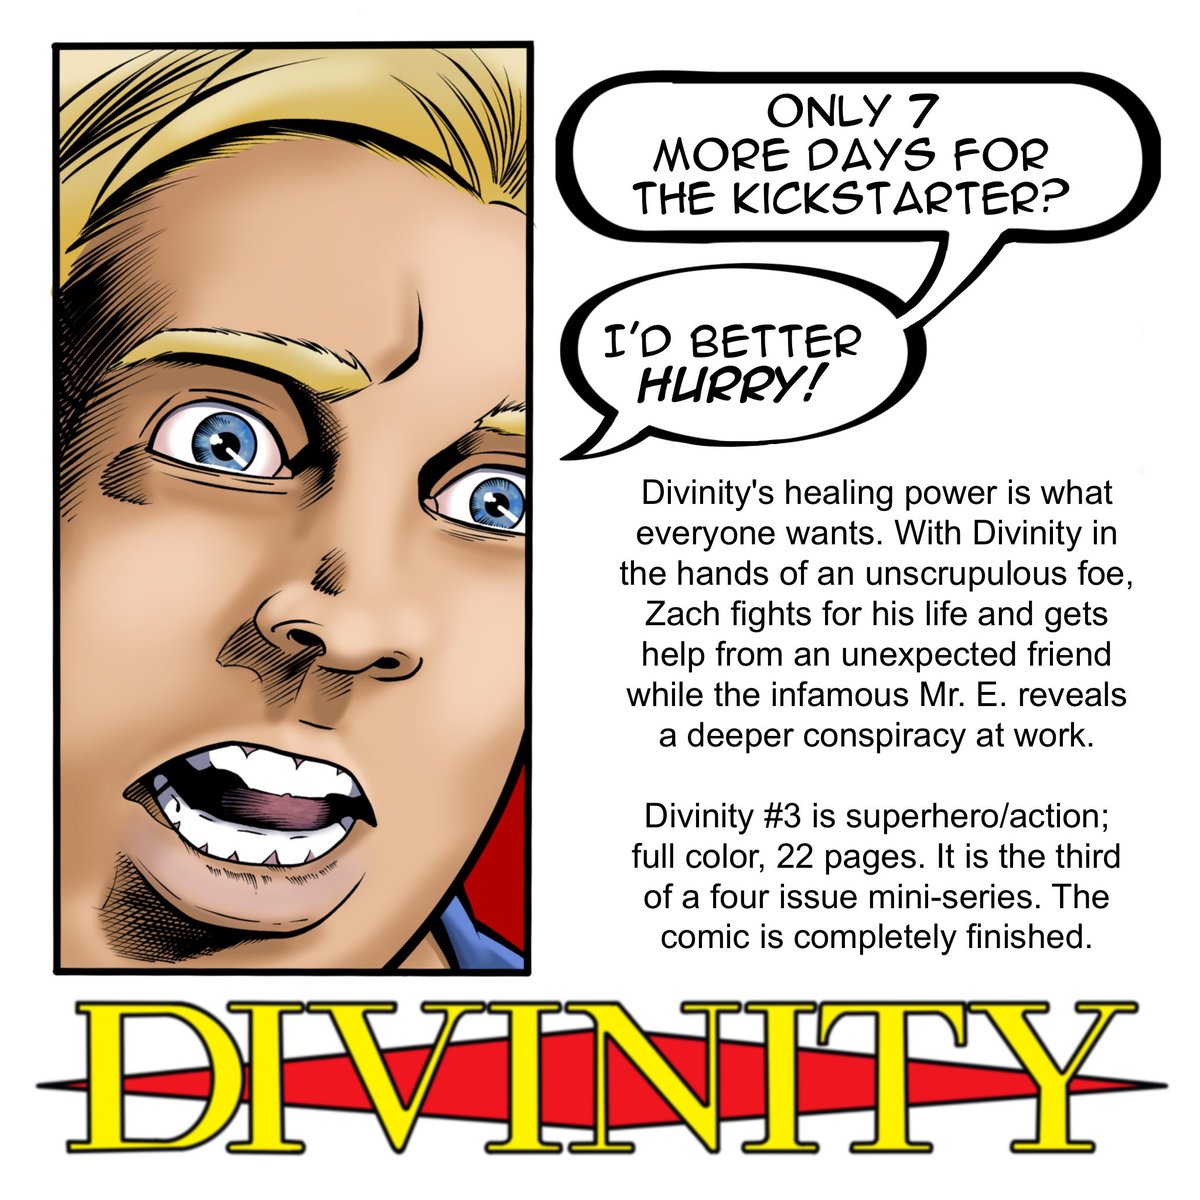 tinyurl.com/Div3Trum4

#makeminesilverline #teenager #divinity #powers #comicbooks #comics #indiecomics #indieCreator #indiecomicbooks #publishing #art #goodbooks @SilverlineComic